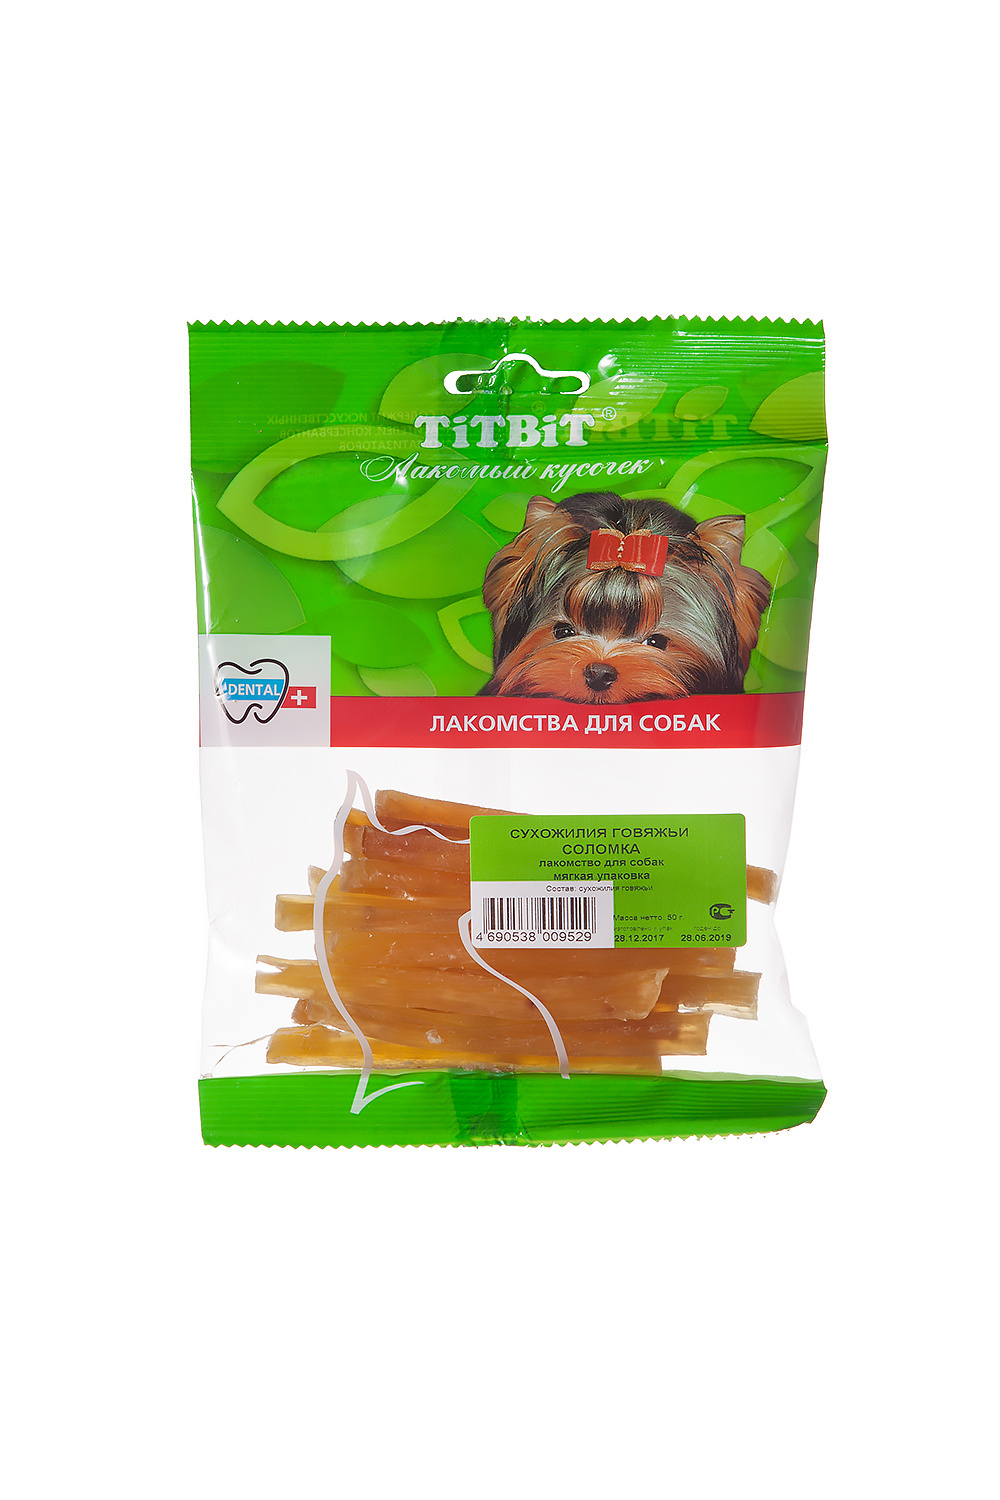 TiTBiT TiTBiT сухожилия говяжьи (соломка) - мягкая упаковка (50 г) цена и фото